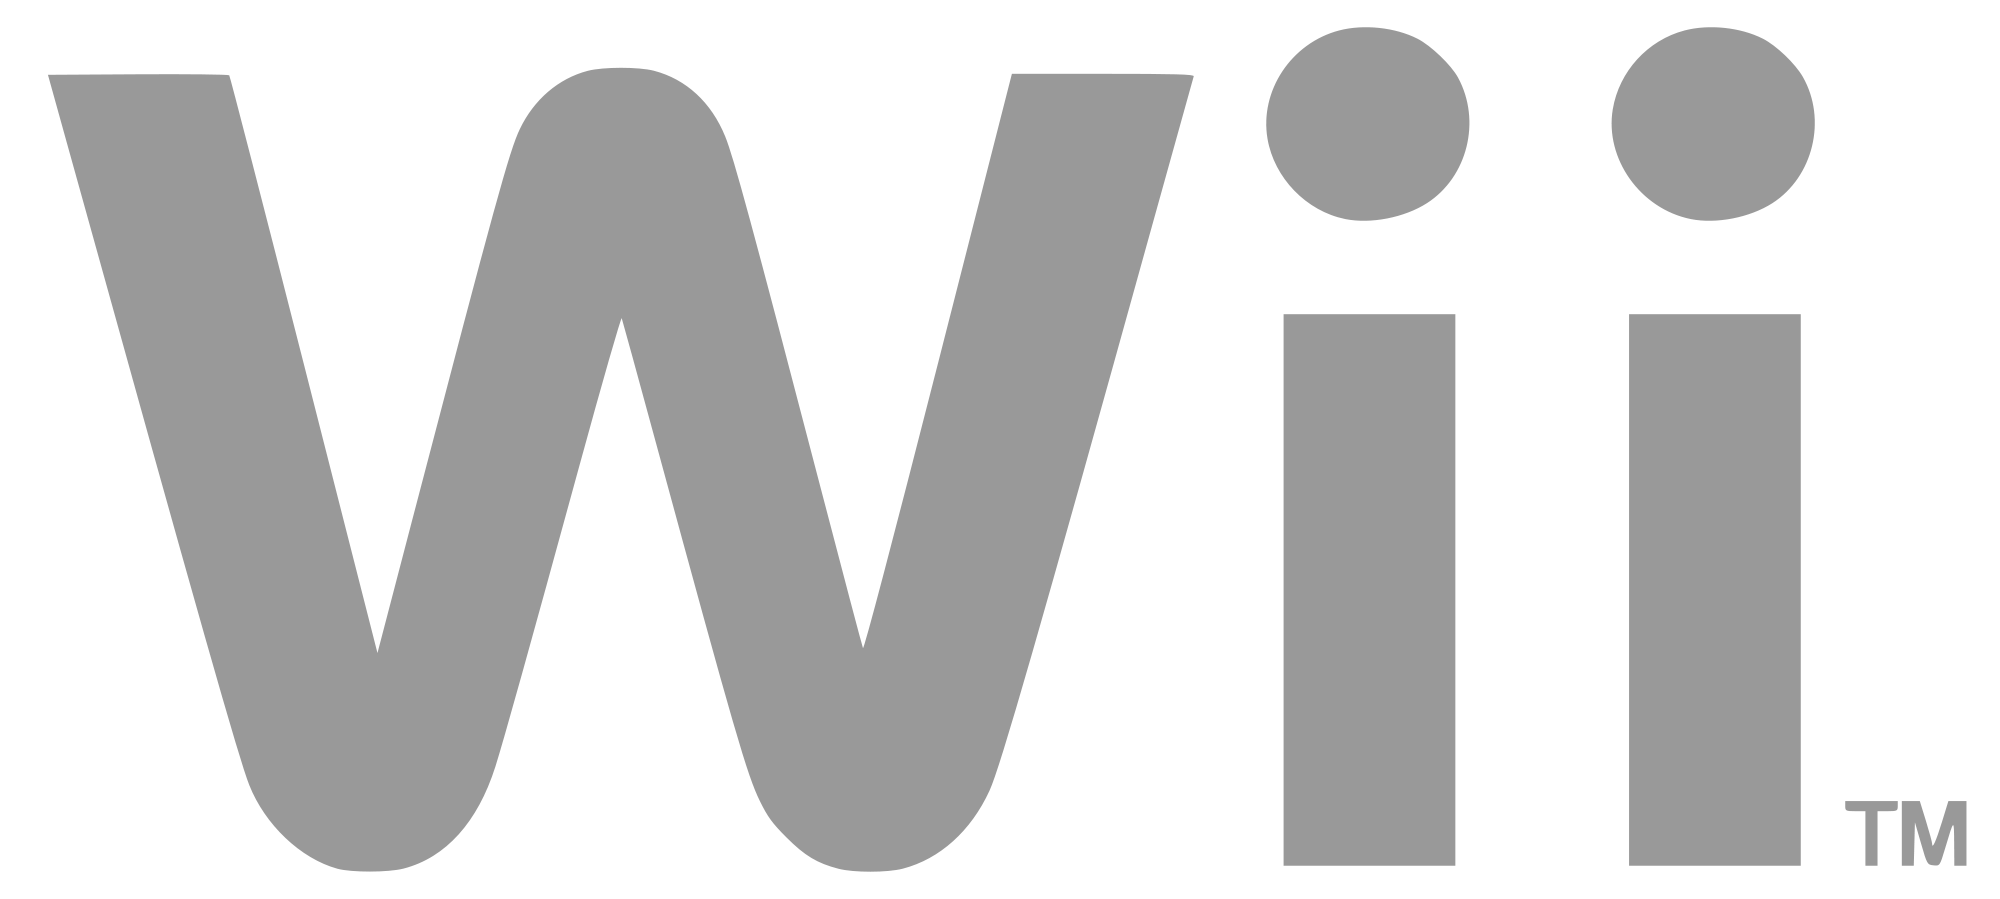 Wii Logo - Wii logo.png